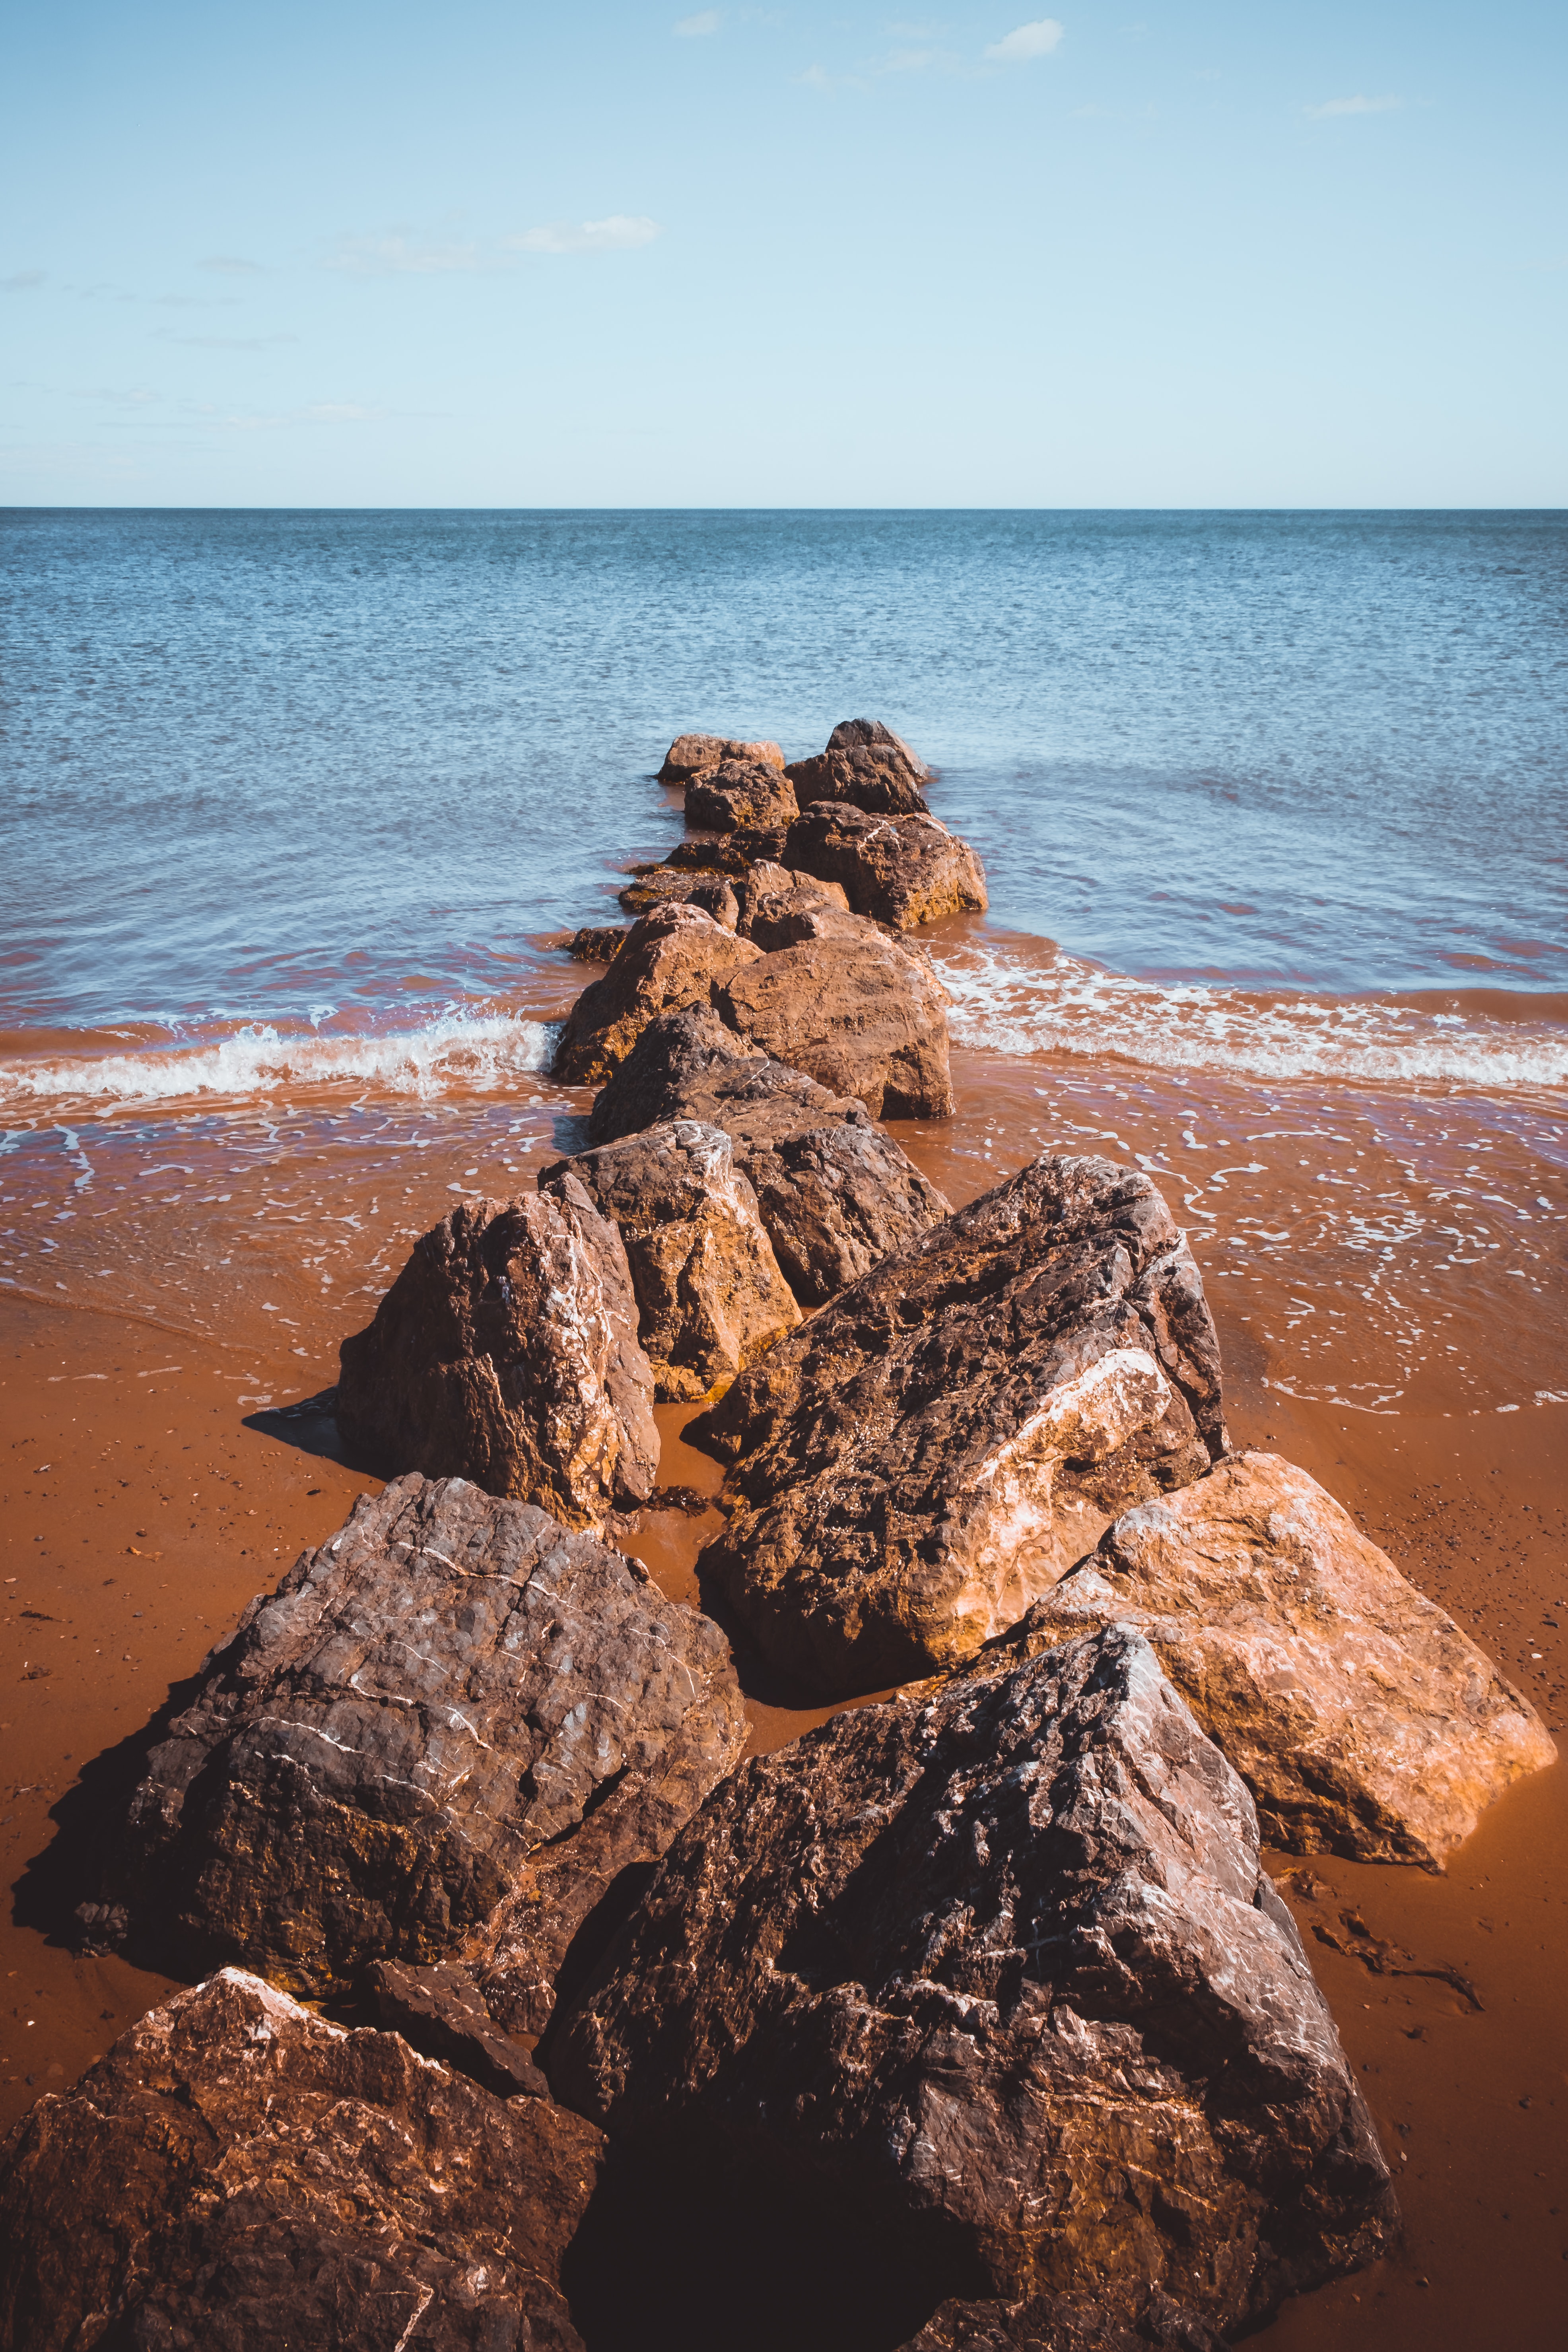 132903 descargar imagen naturaleza, agua, stones, mar, ondas, playa: fondos de pantalla y protectores de pantalla gratis